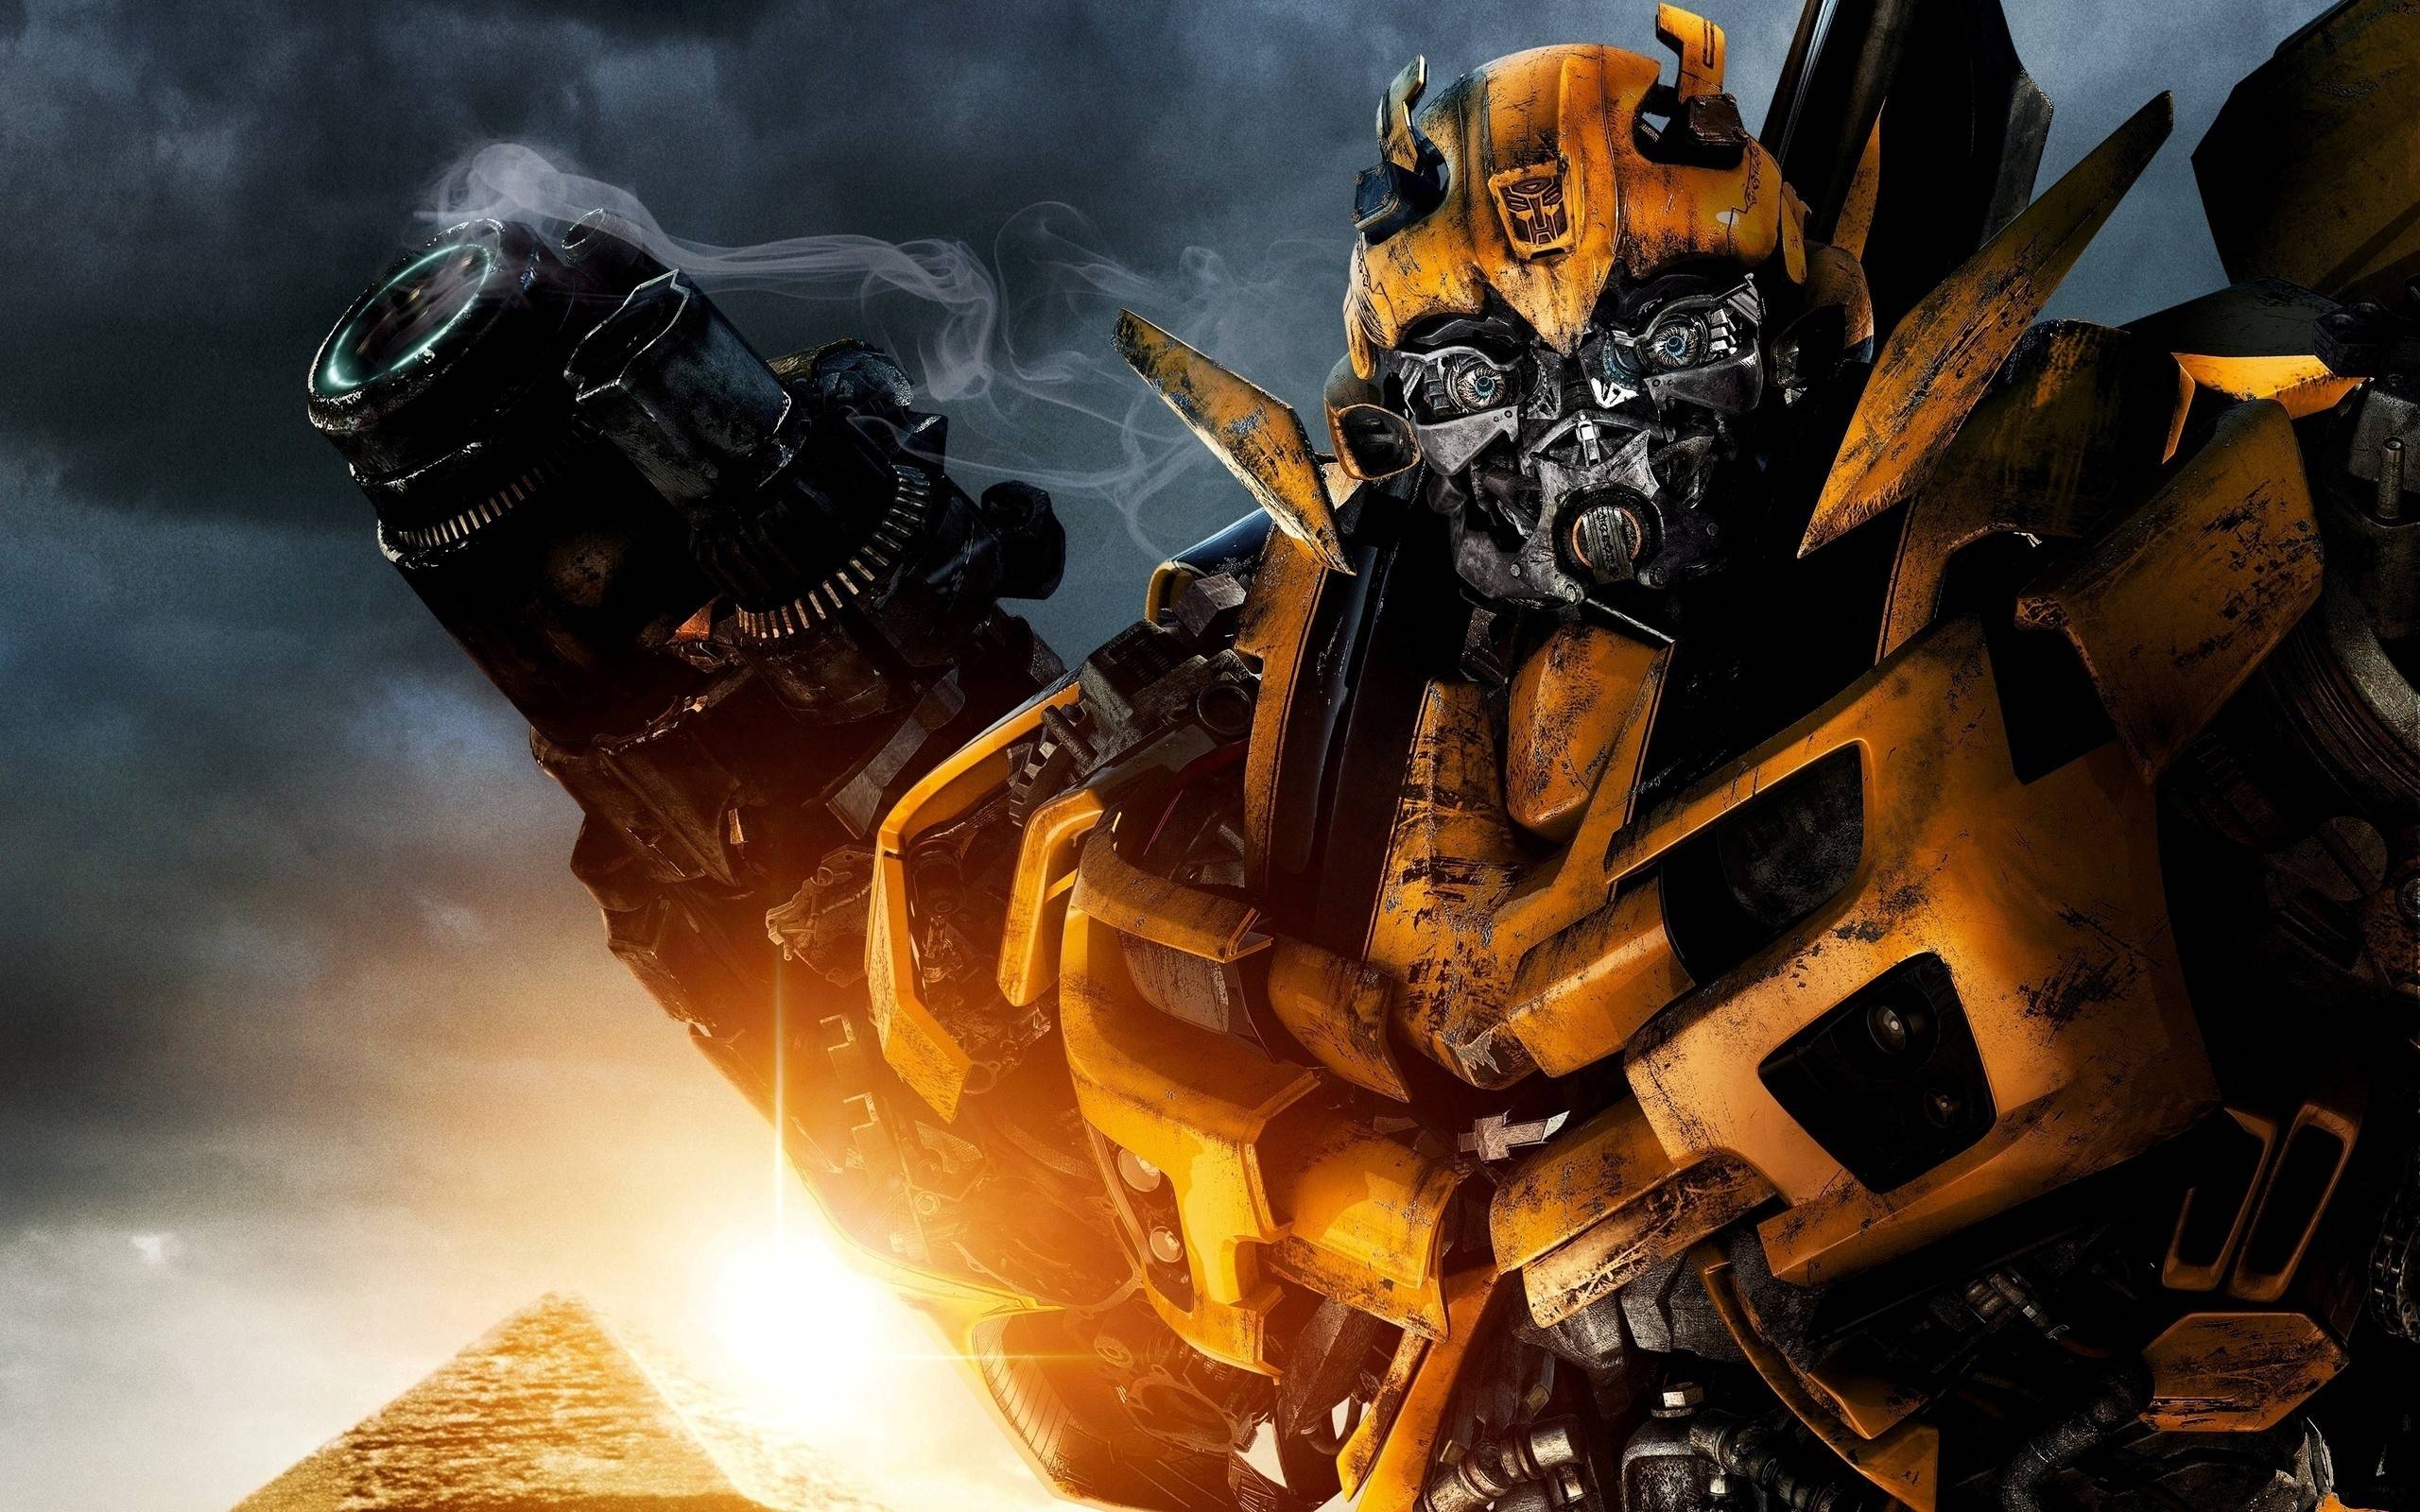 Fonds d&;écran Transformers 3, tous les wallpaper Transformers 3